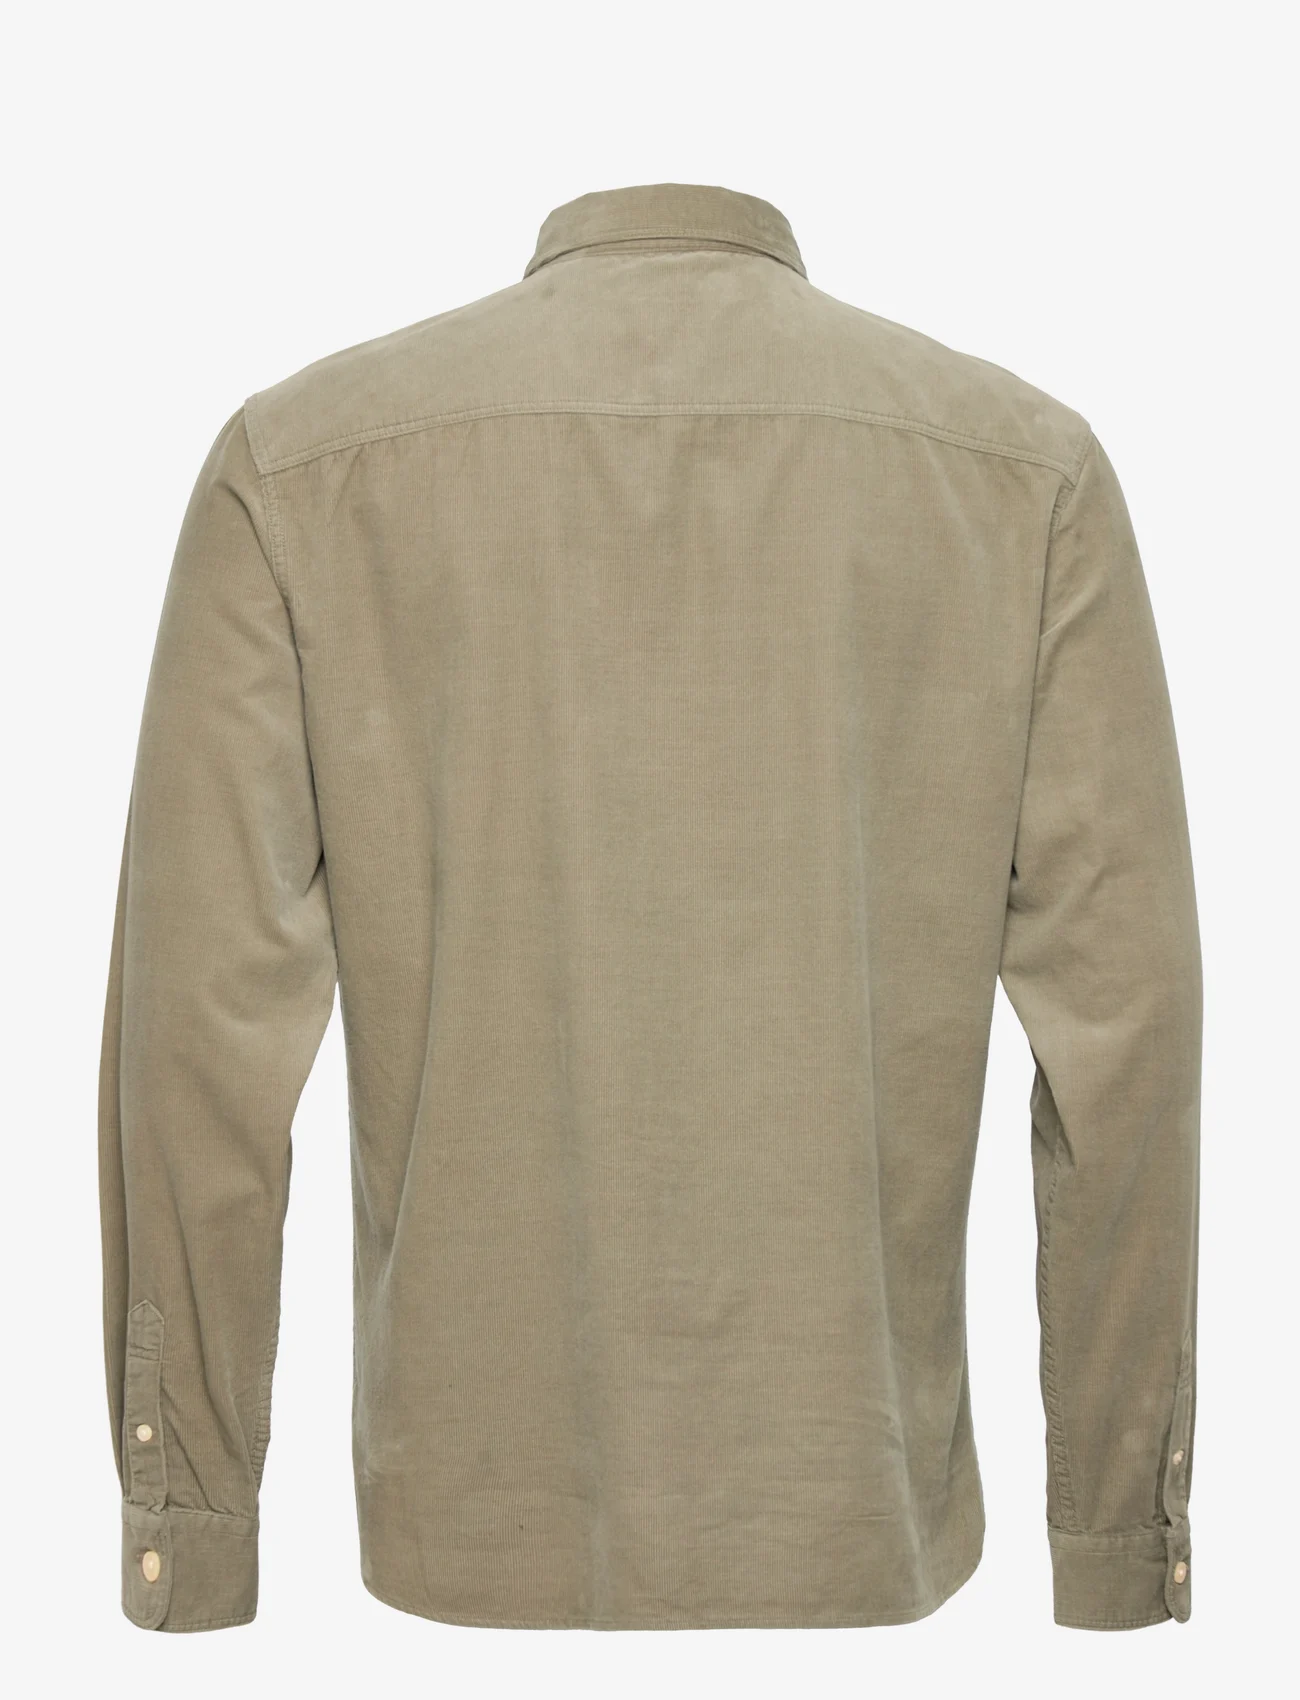 AllSaints - BIRCHWOOD LS SHIRT - corduroy shirts - dusty olive green - 1